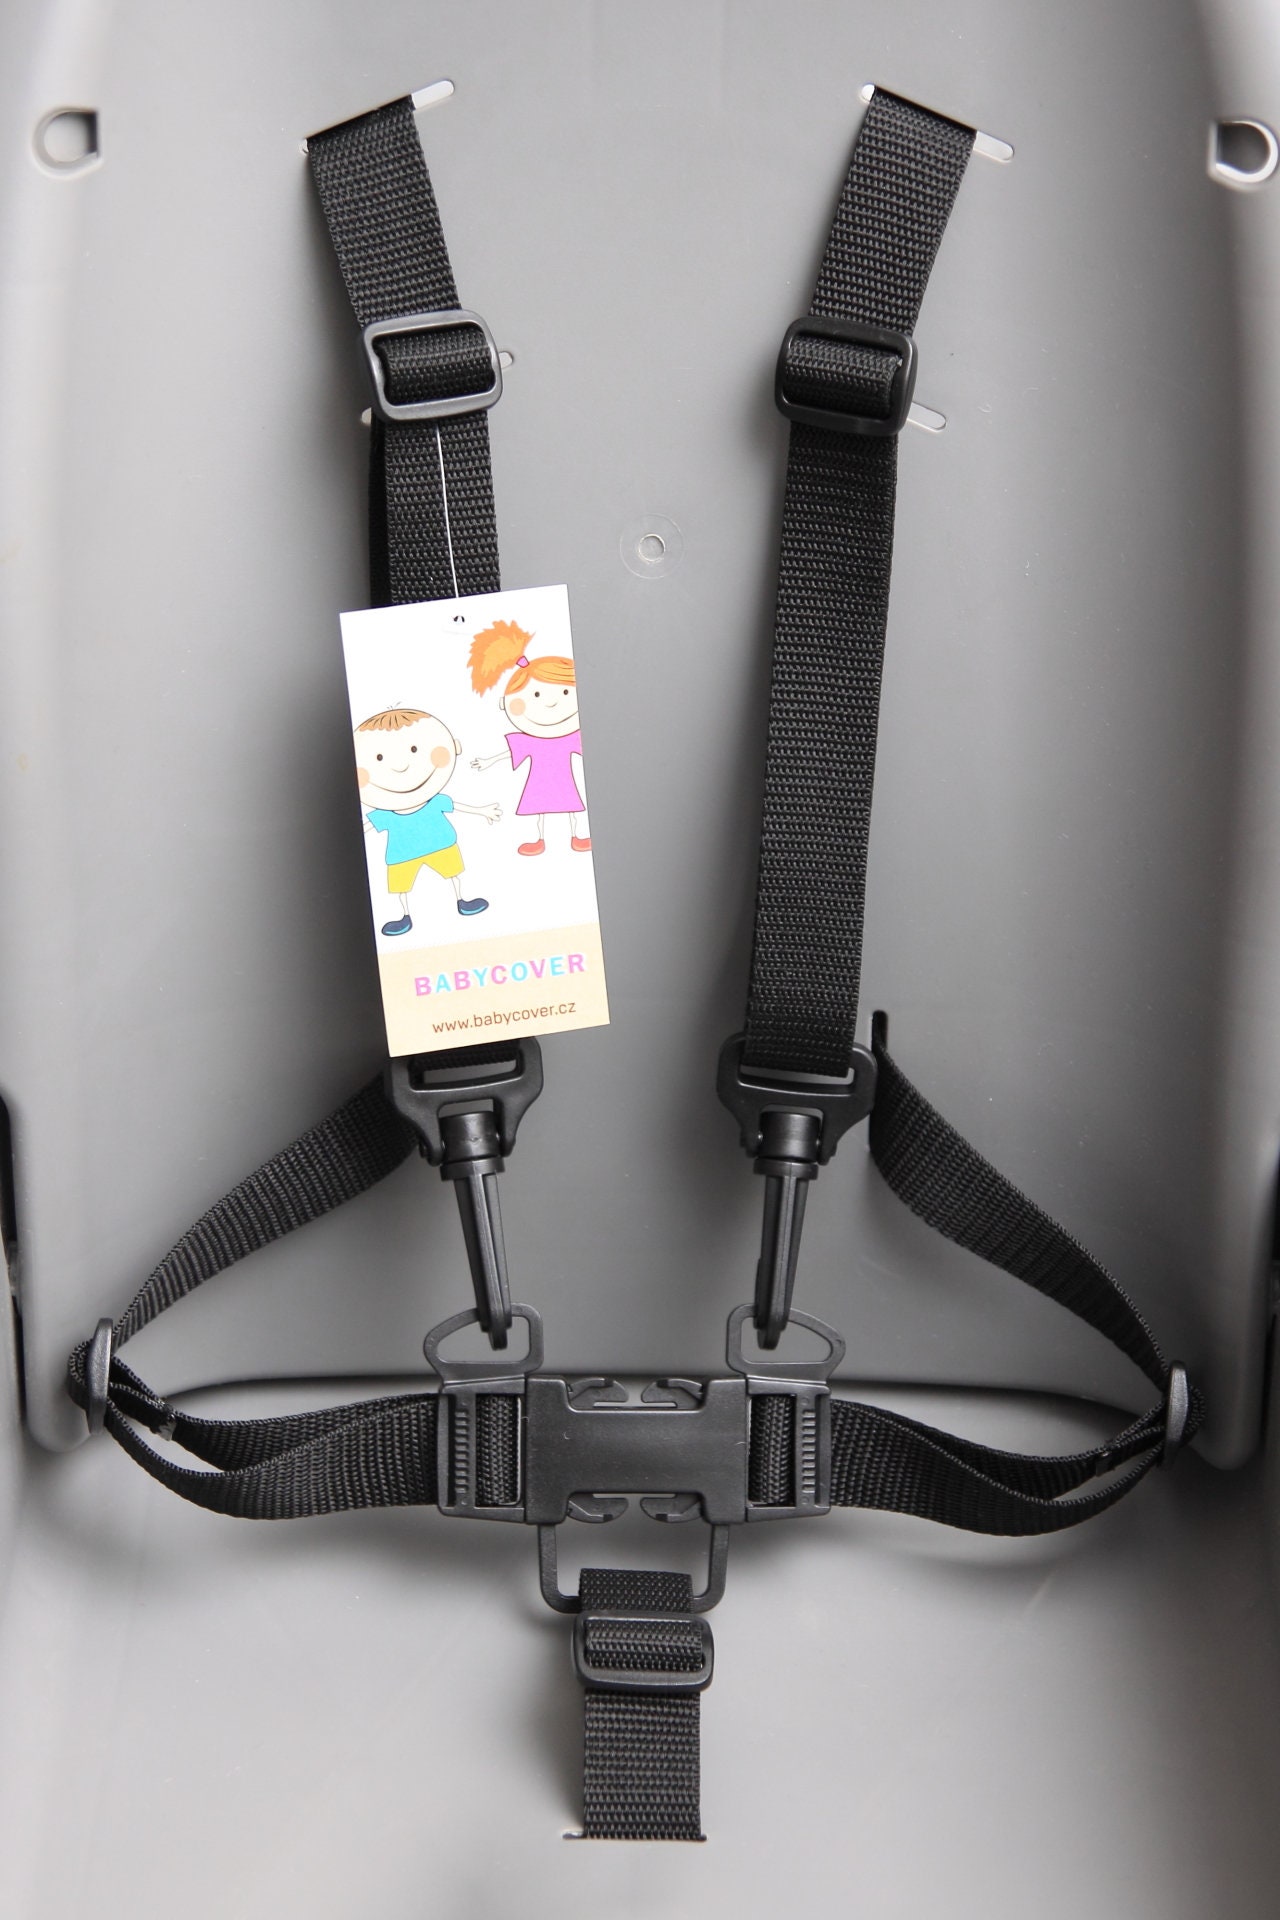 Child safety harness - .de